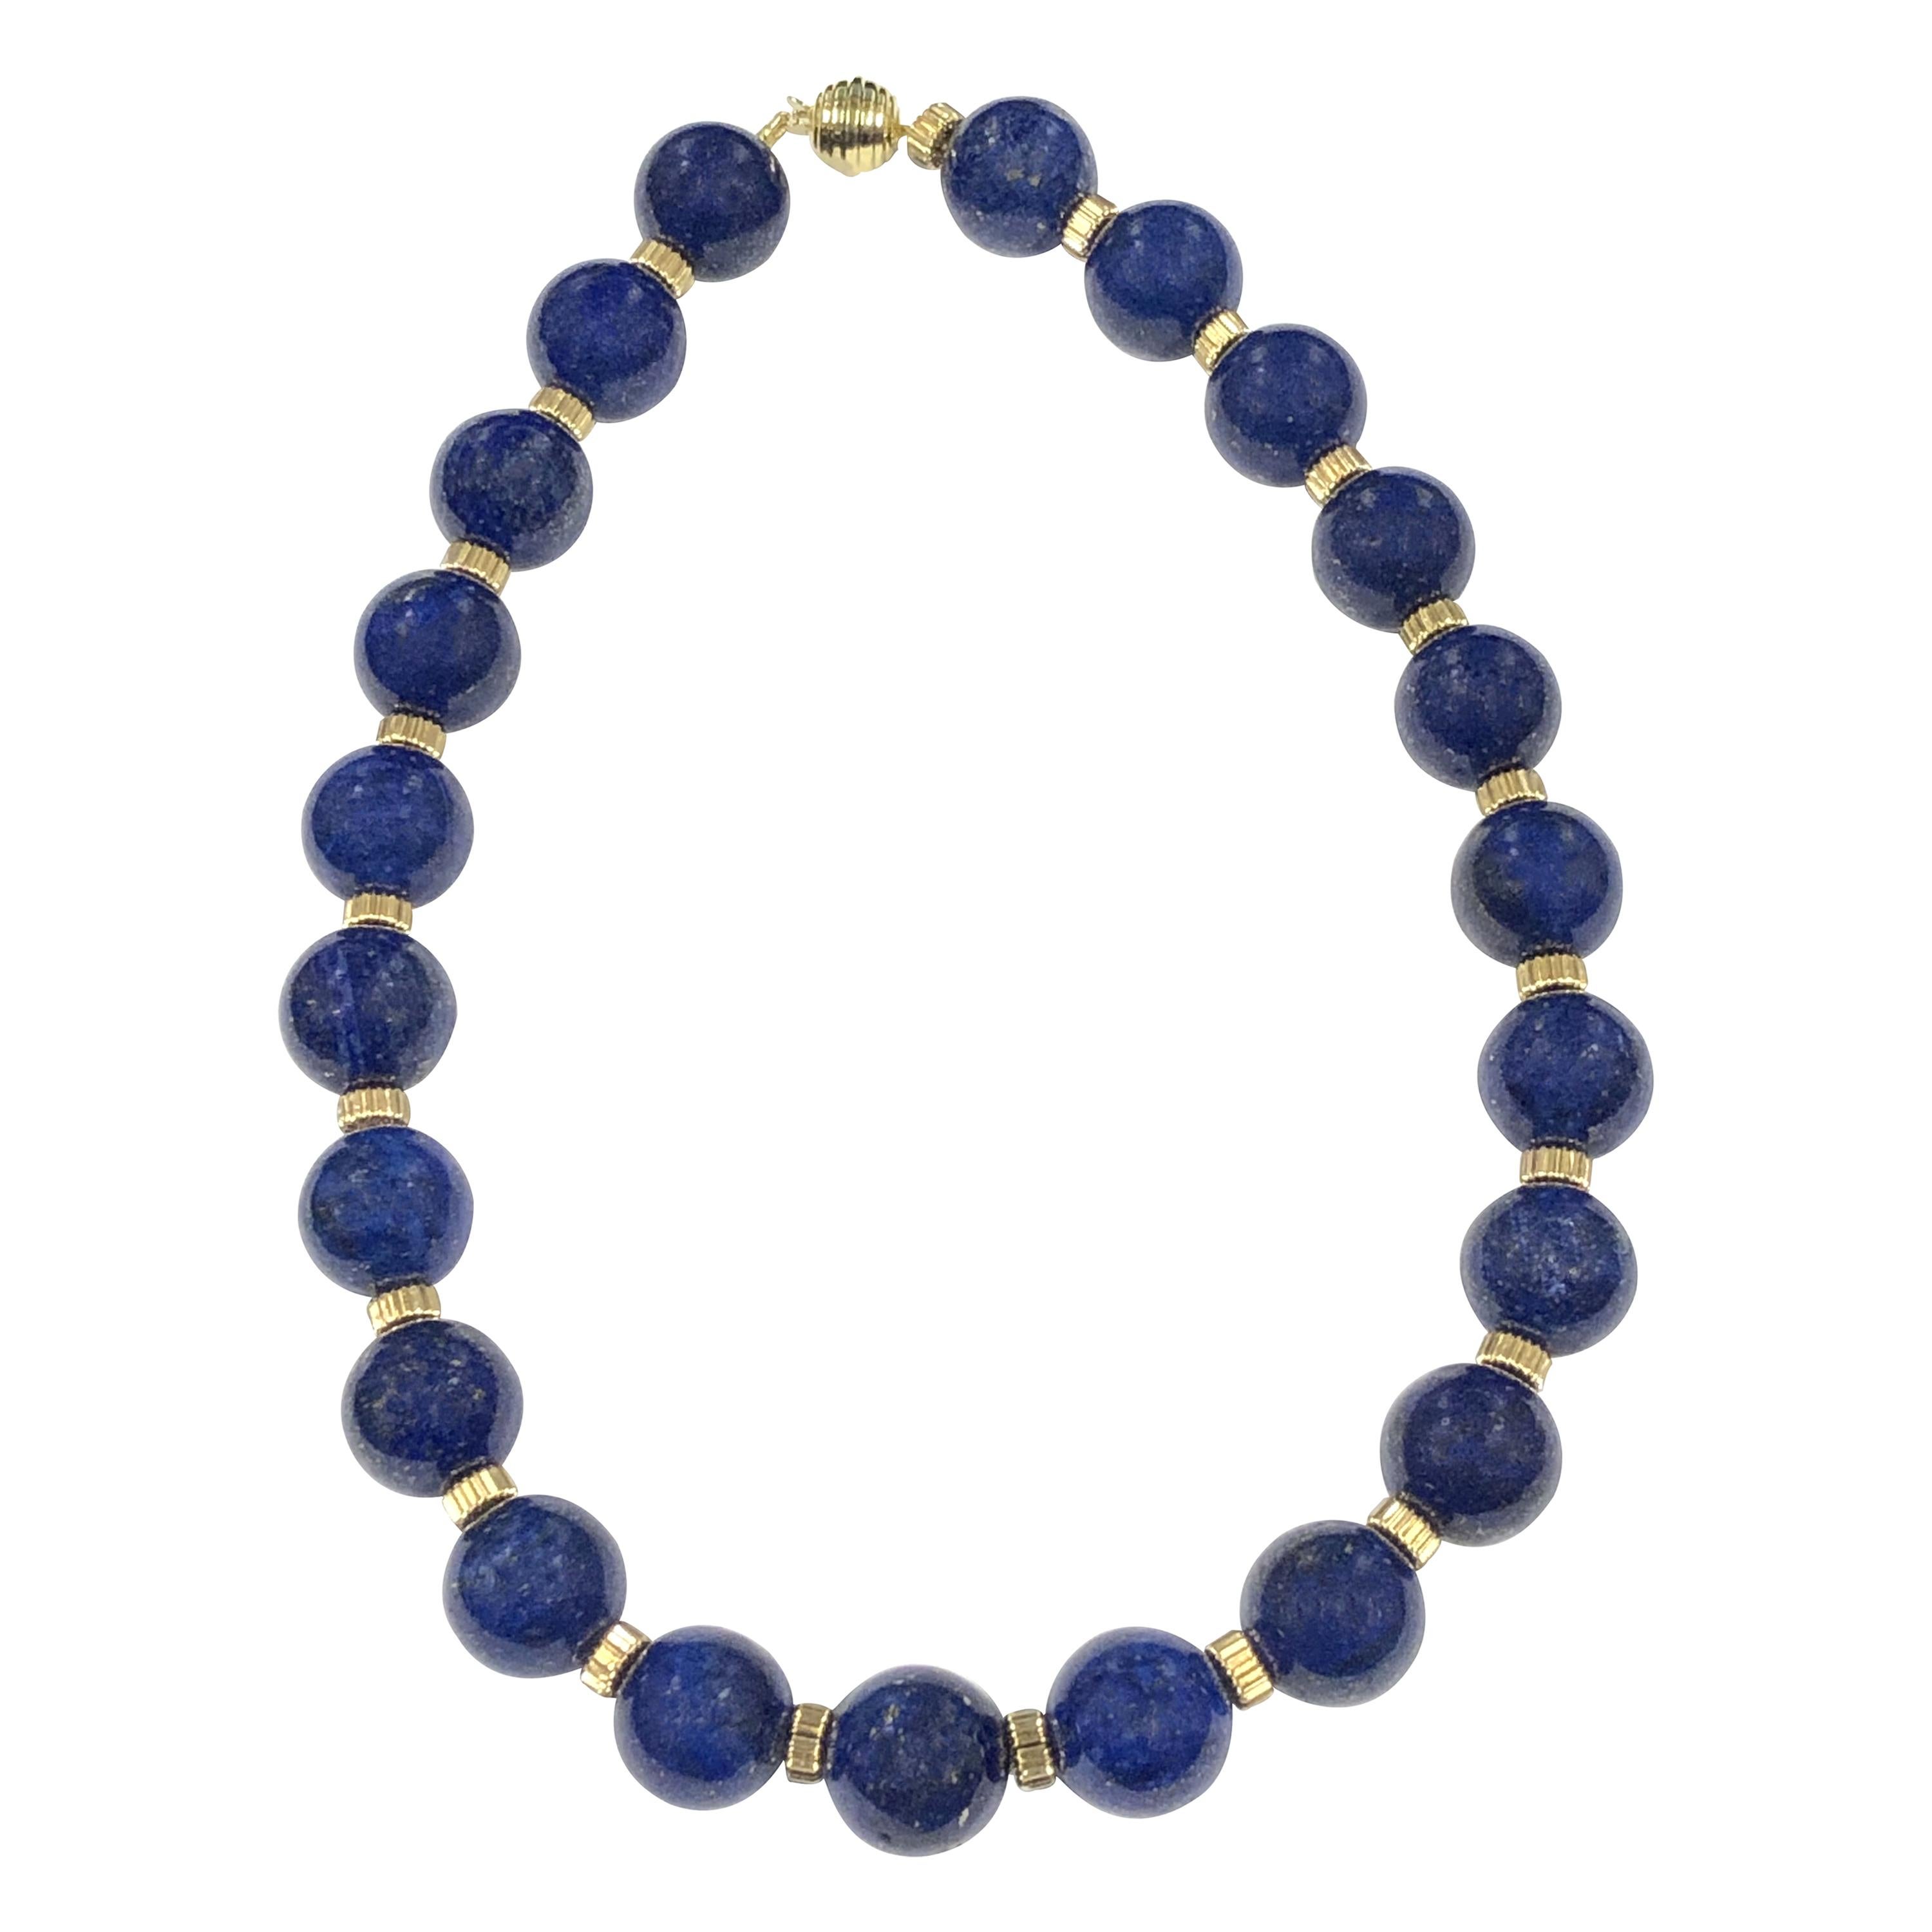 Large Lapis Lazuli and Gold Necklace